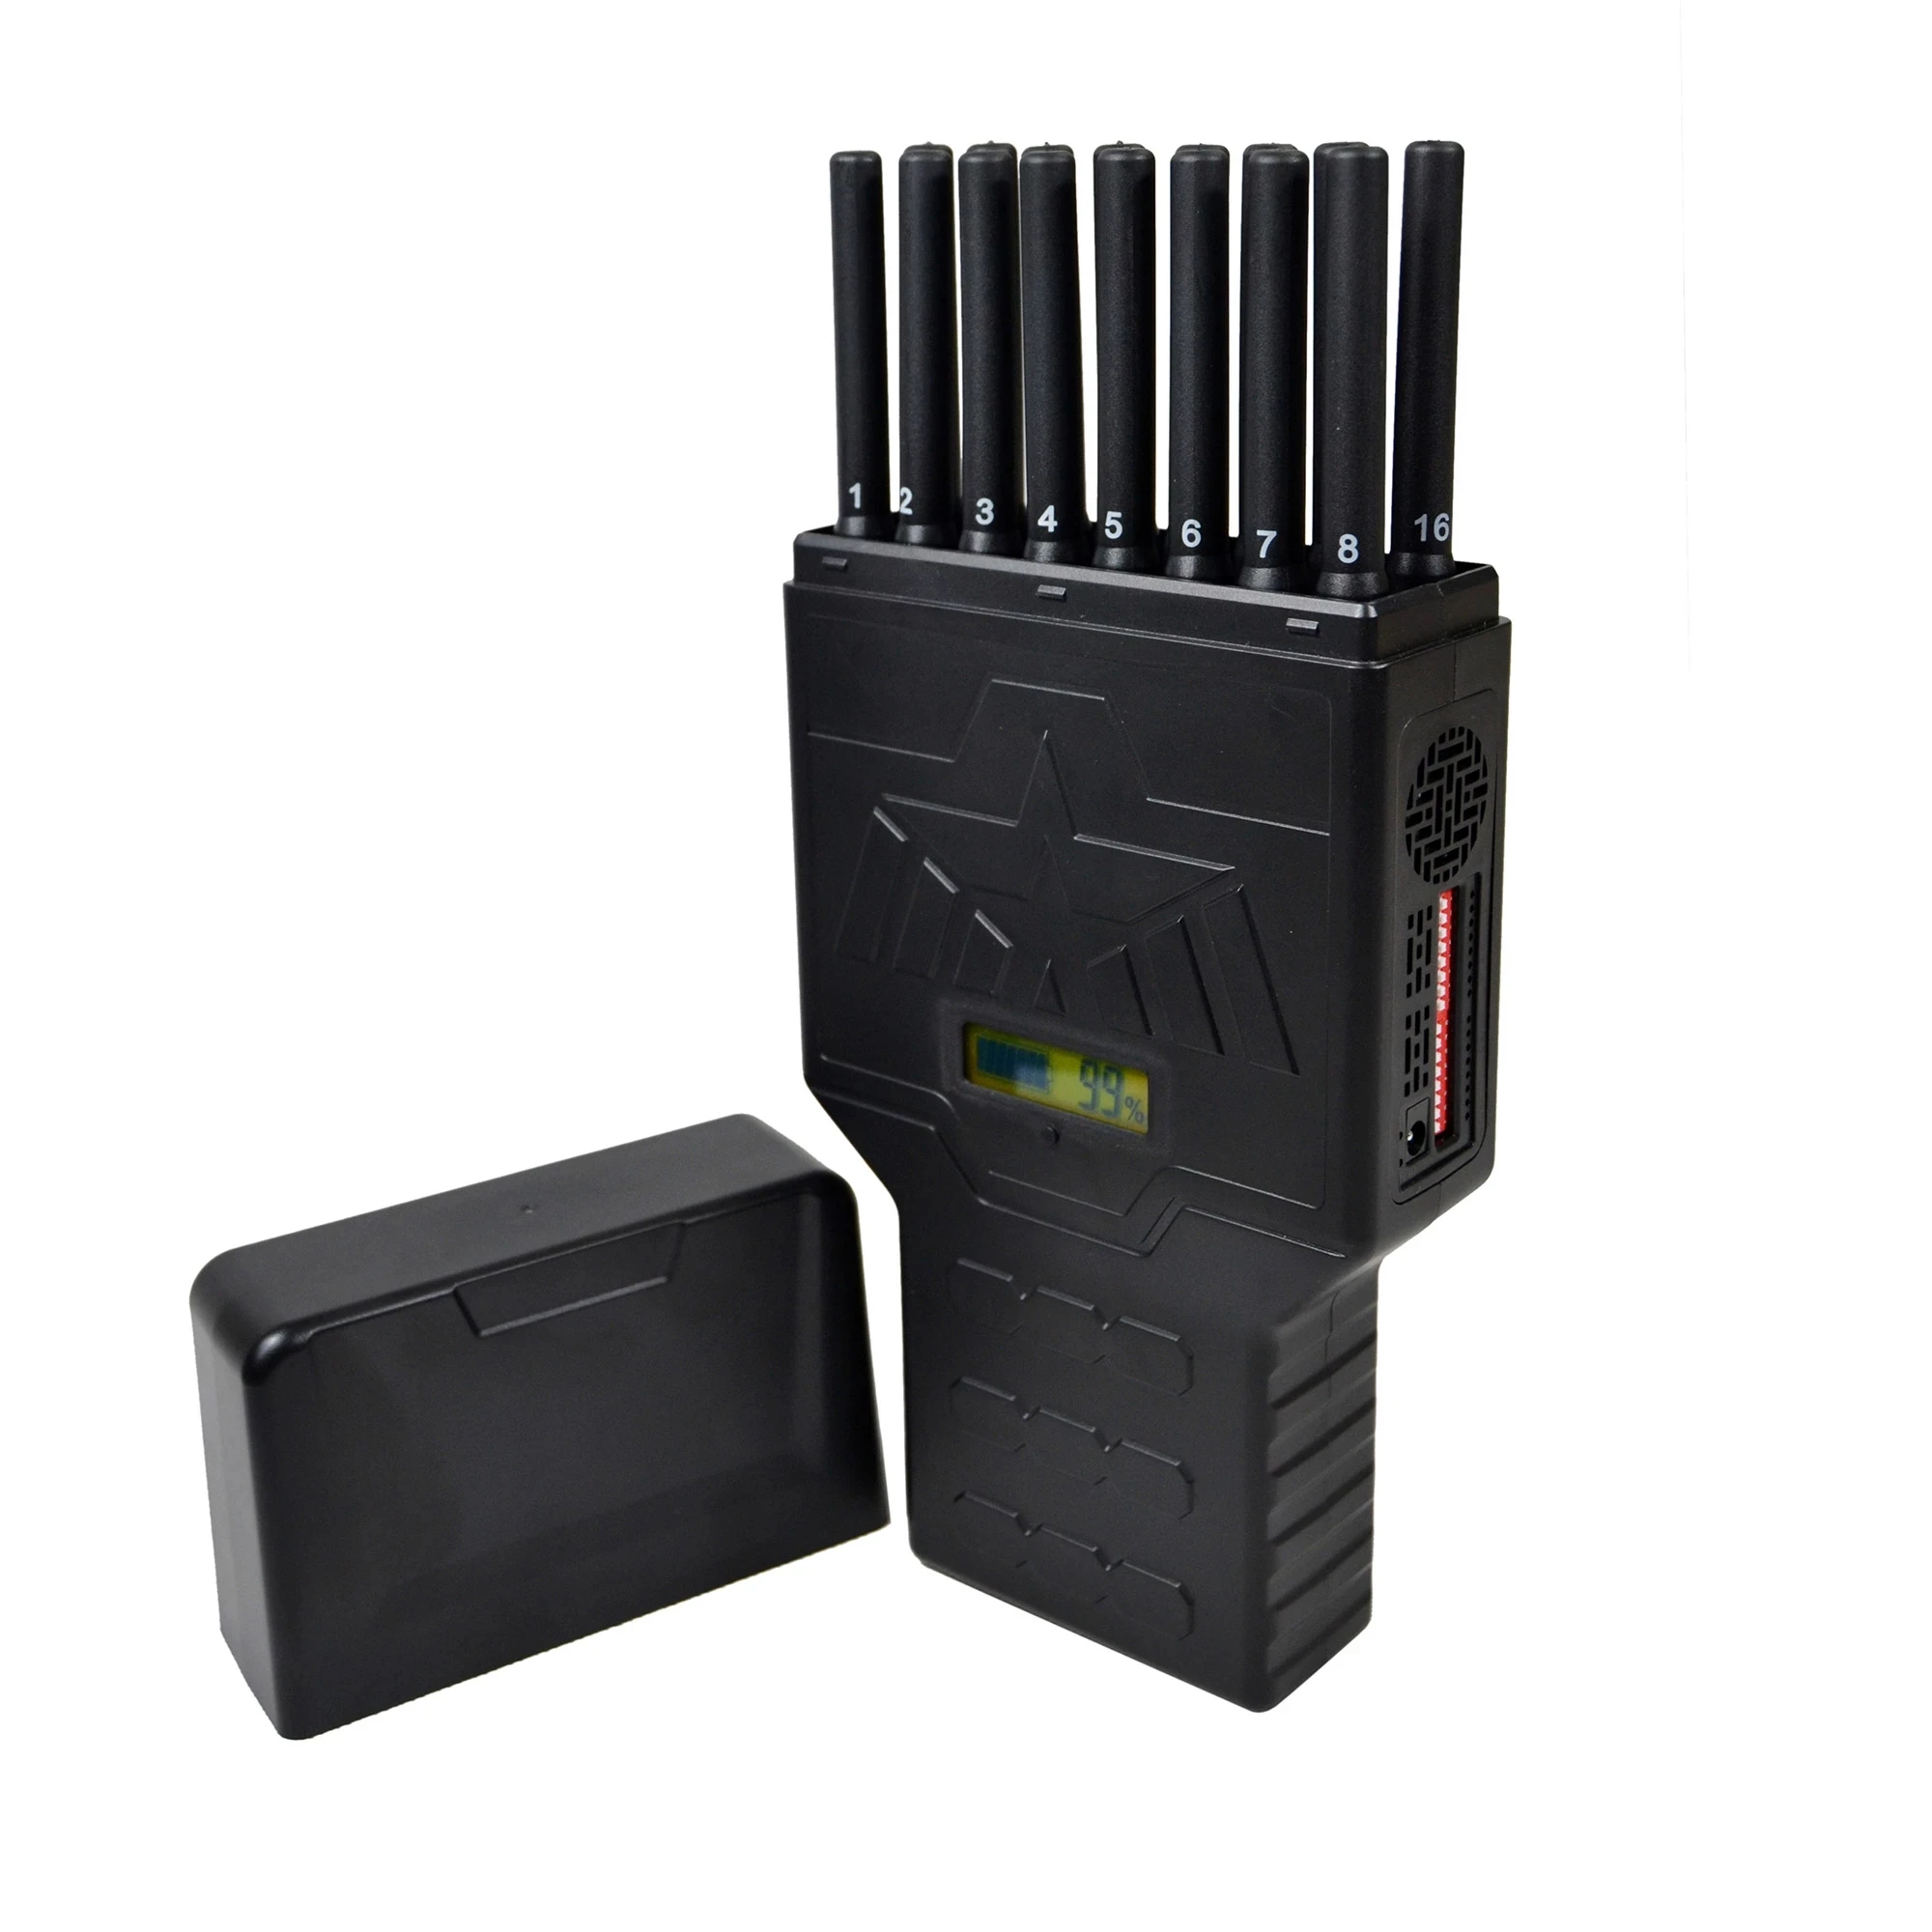 Enlarge 16 Handheld Full Bands Mobile Phone detector for GPS 5G/4G/3G/2G Walkie-Talkie LOJACK Bug Camera